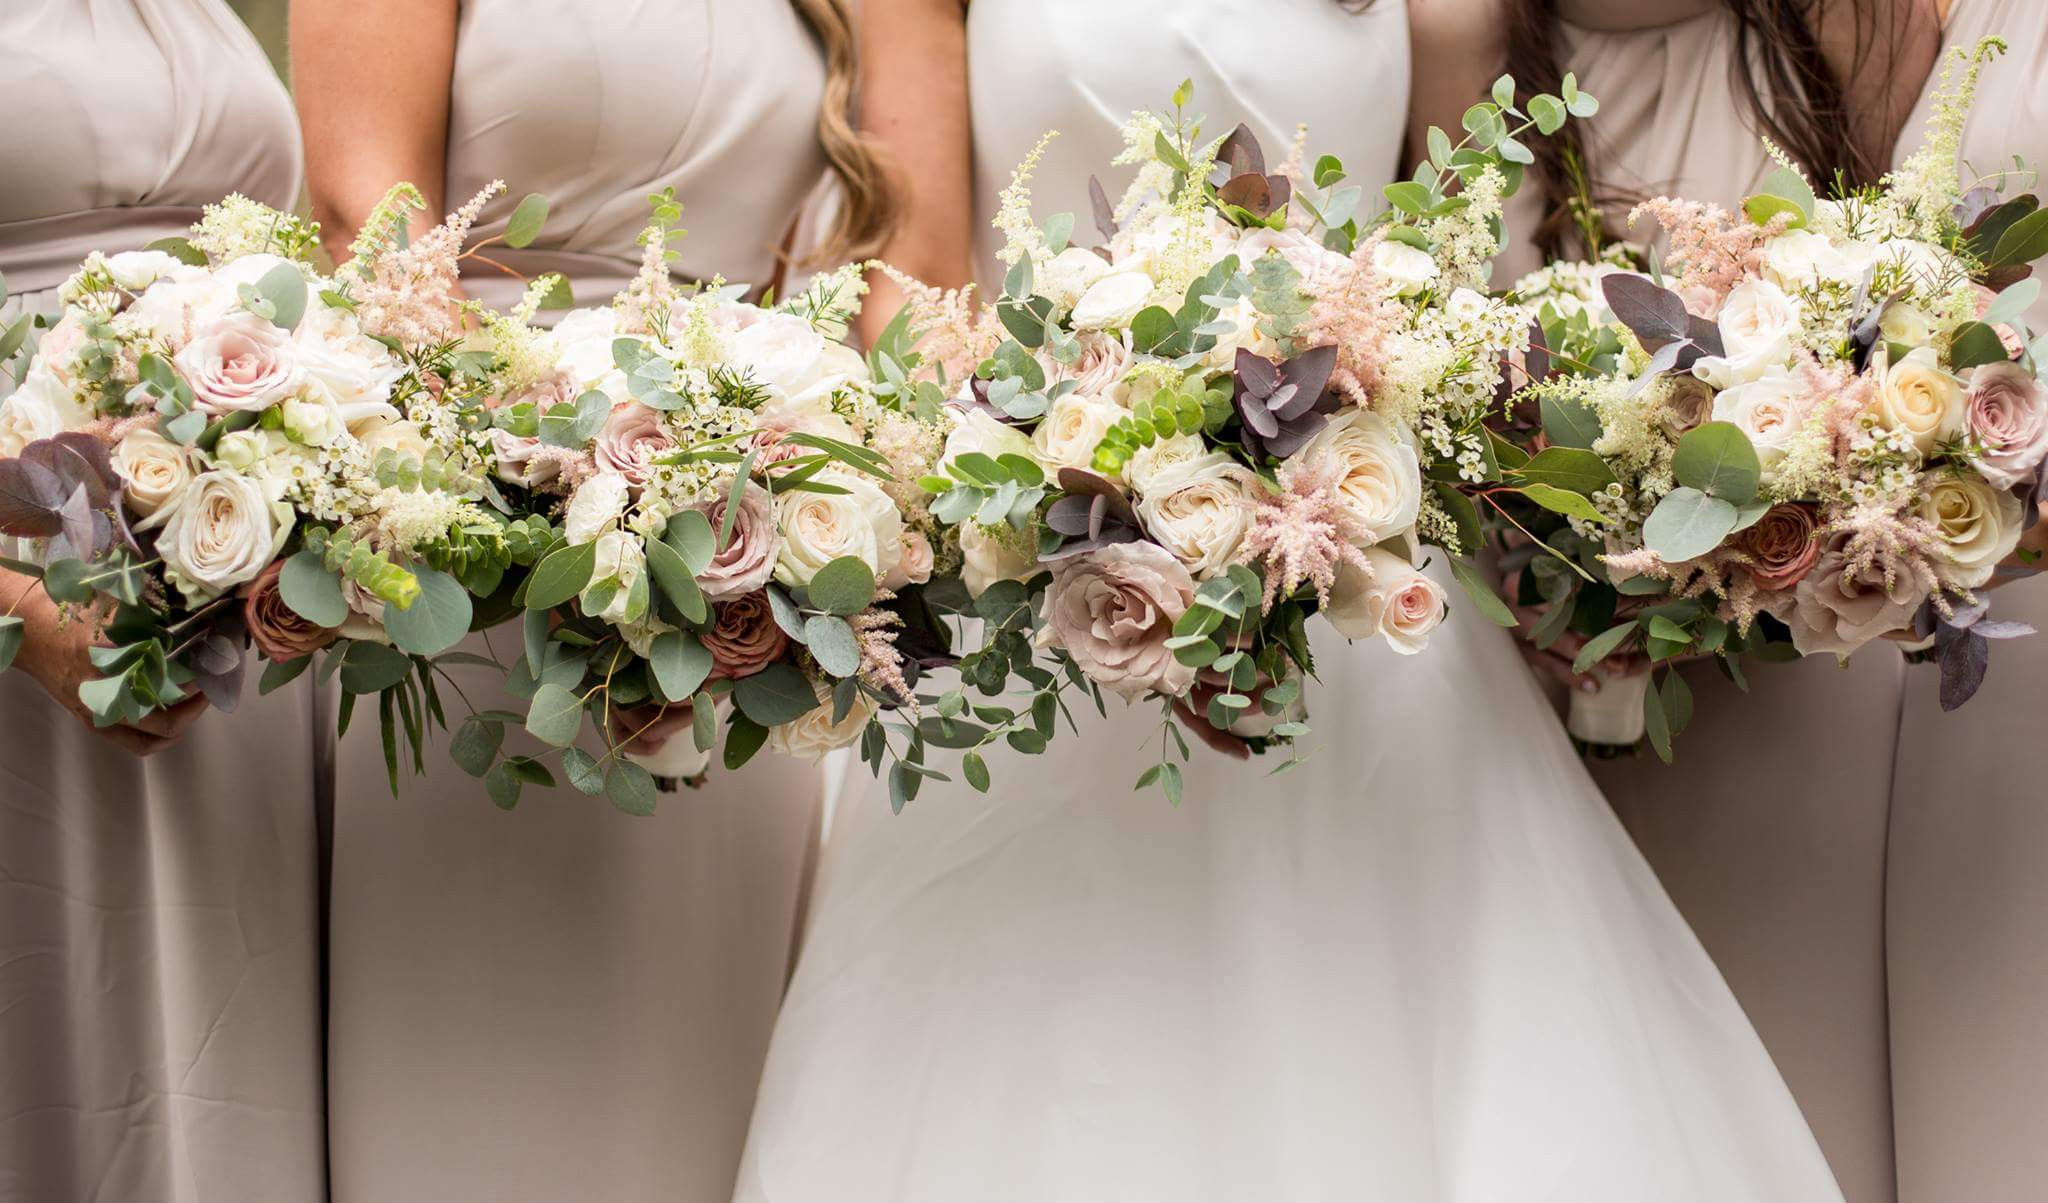 Popular Flowers For Weddings
 Top Wedding Flower Trends for 2018